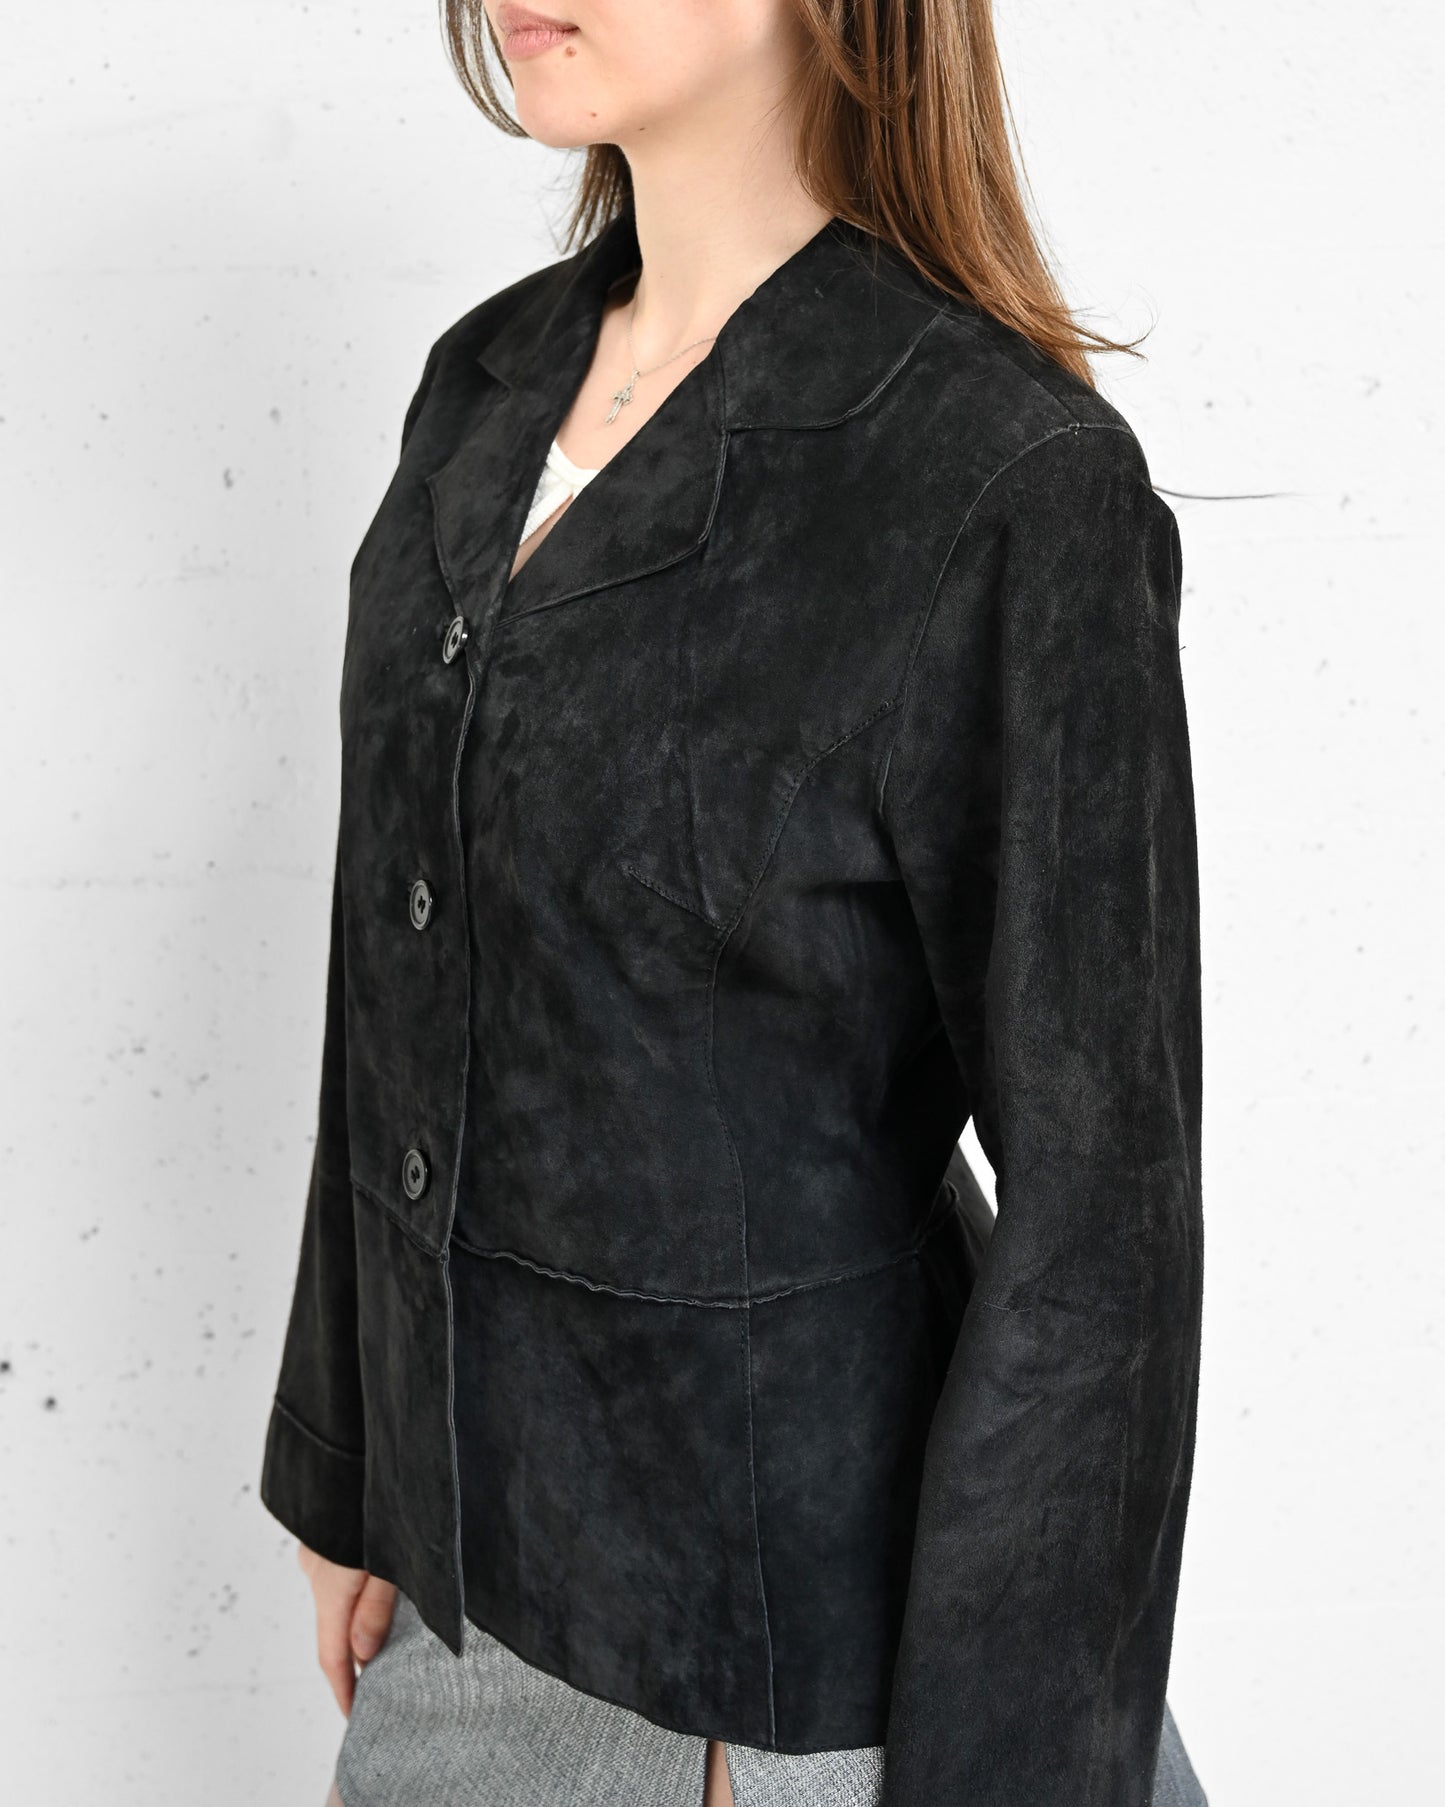 Black Suede Jacket (M)